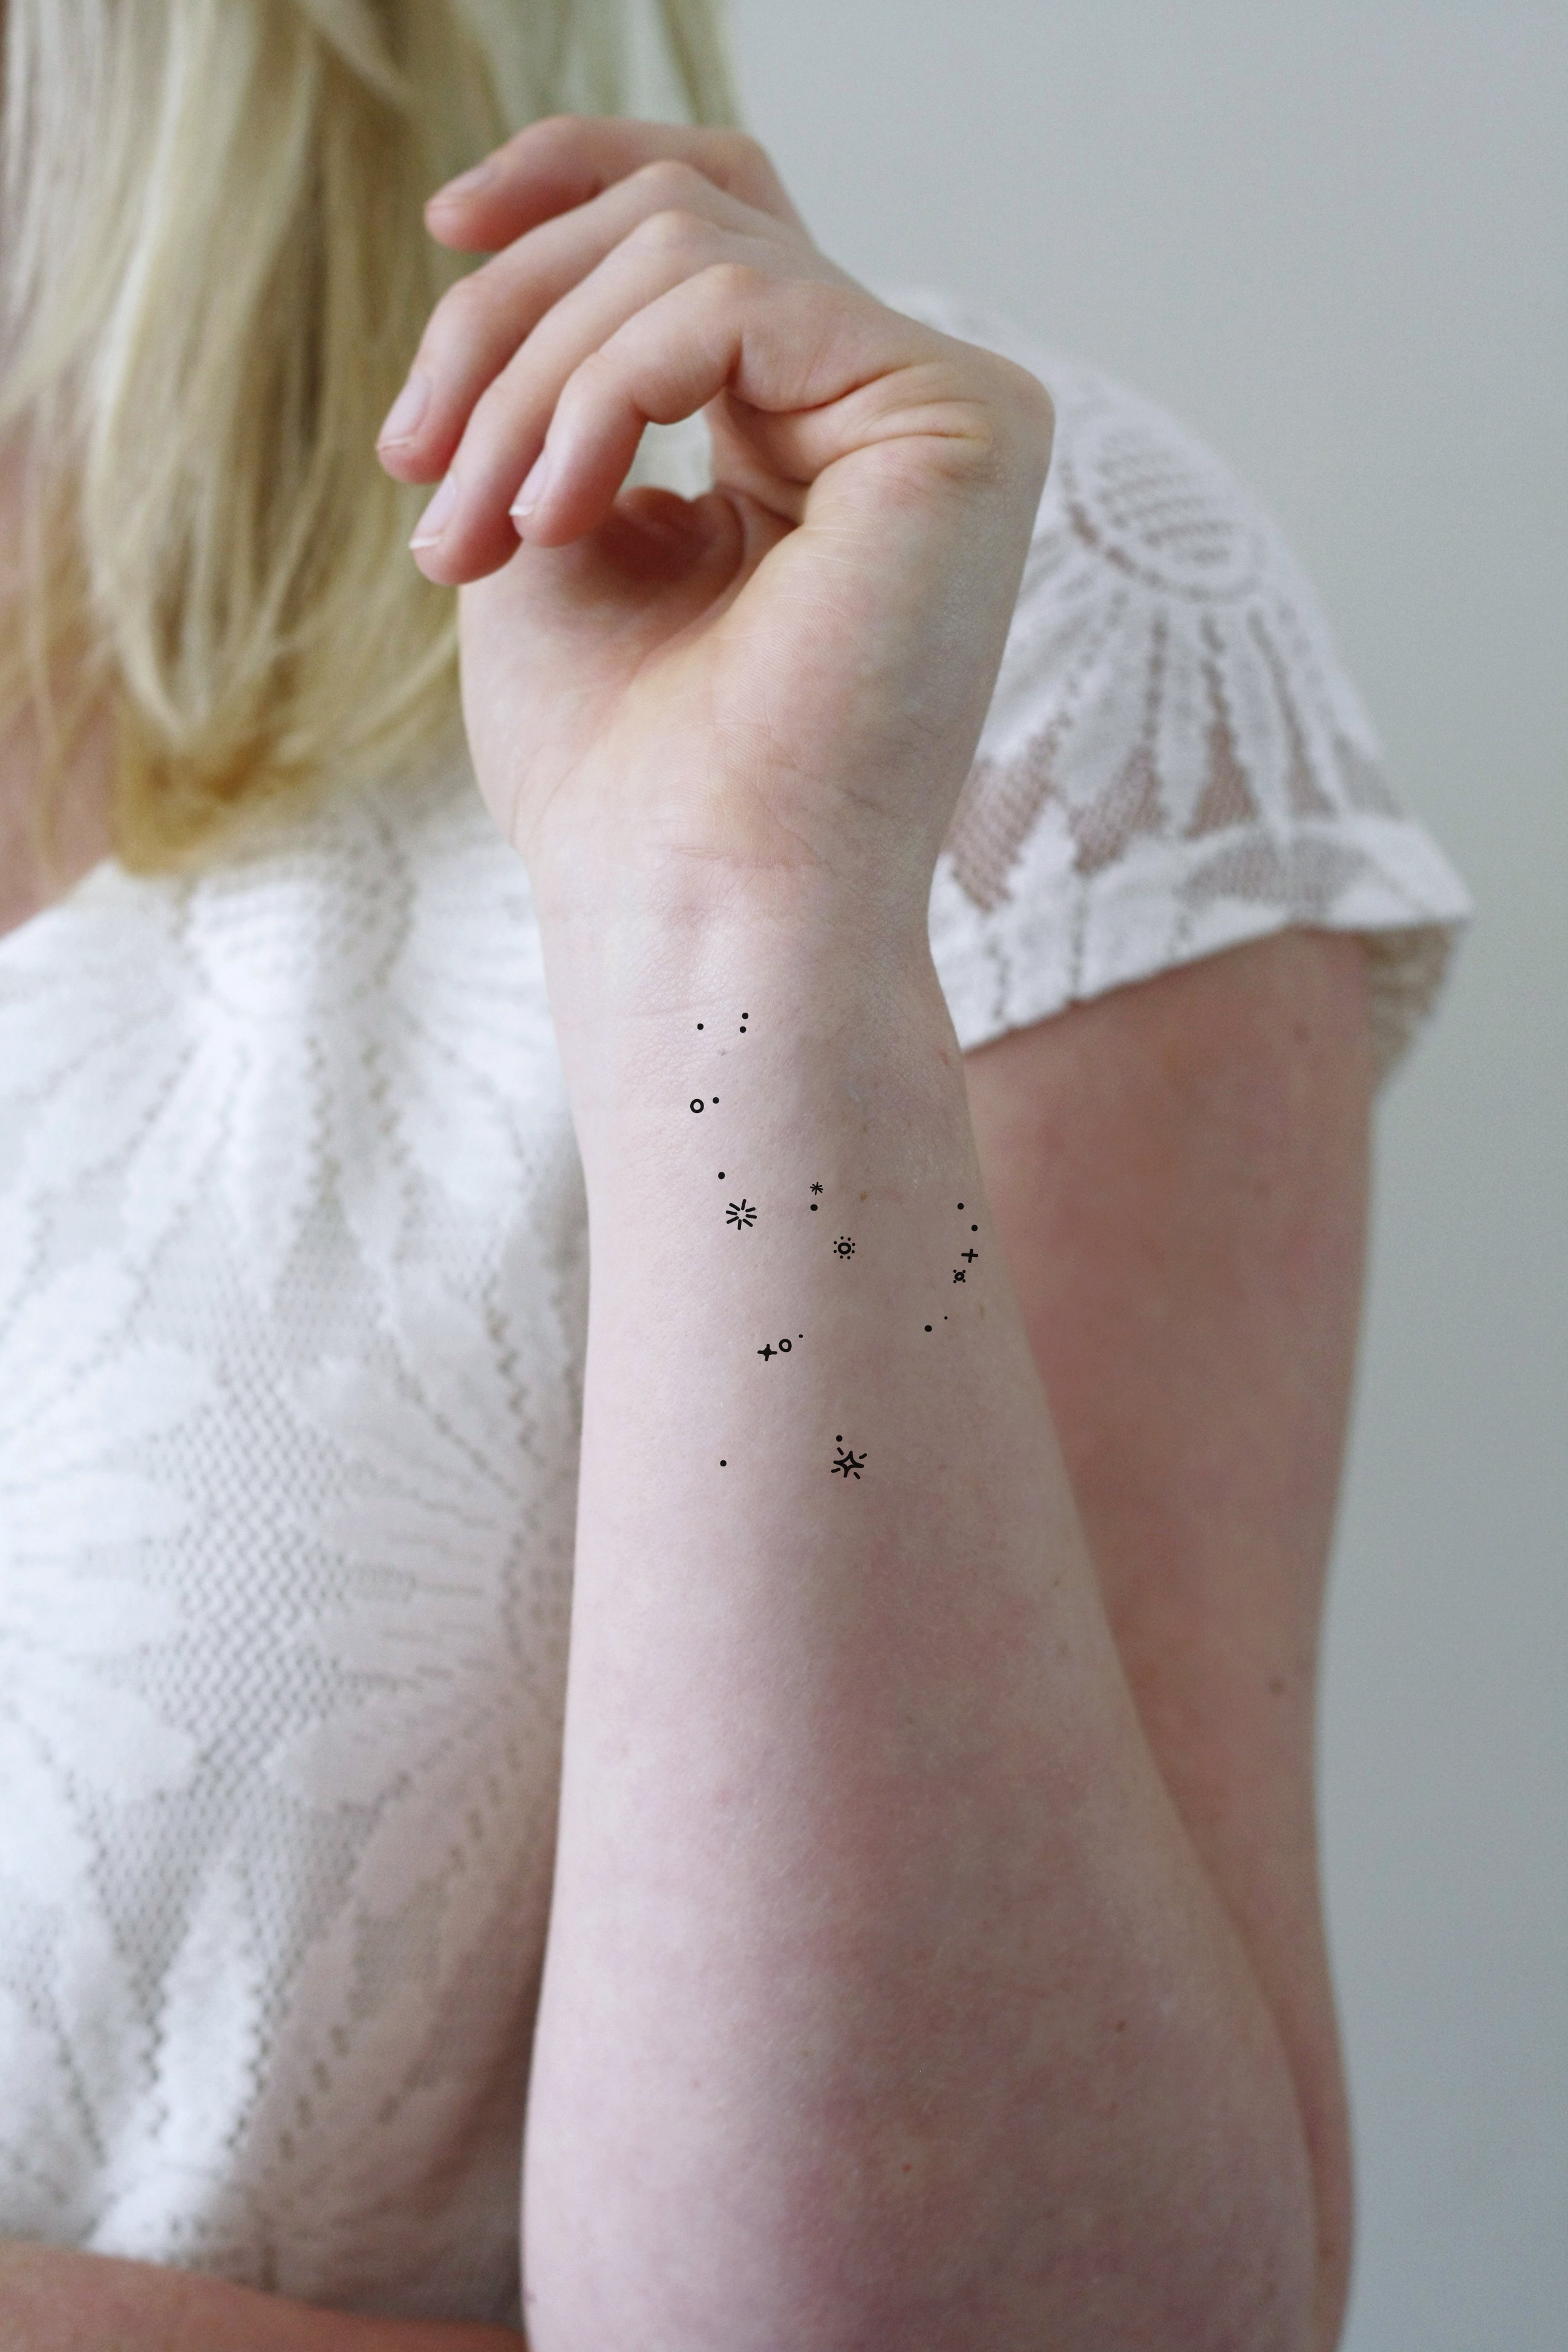 Orion constellation temporary tattoo - Temporary Tattoos ...